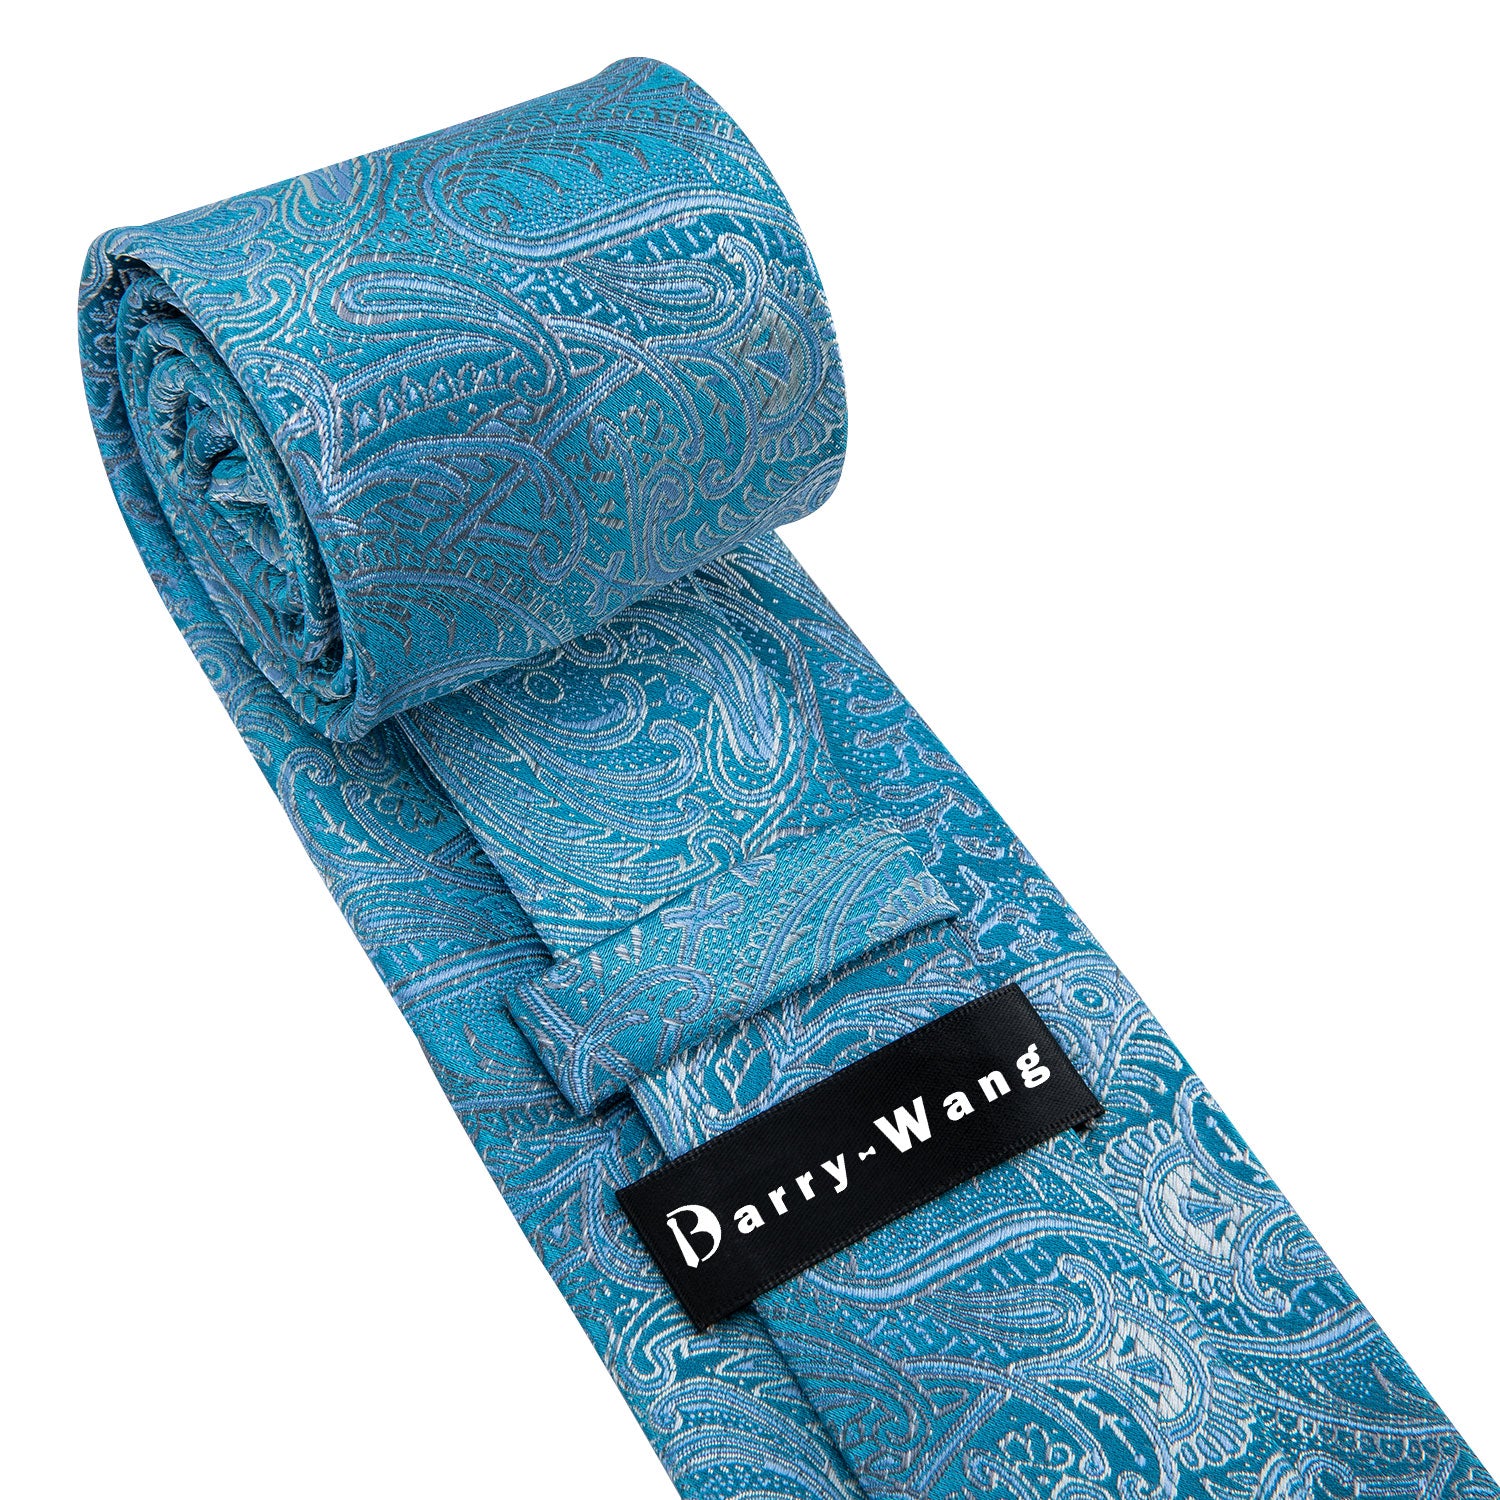 Blue Paisley Silk Tie Pocket Square Cufflinks Set